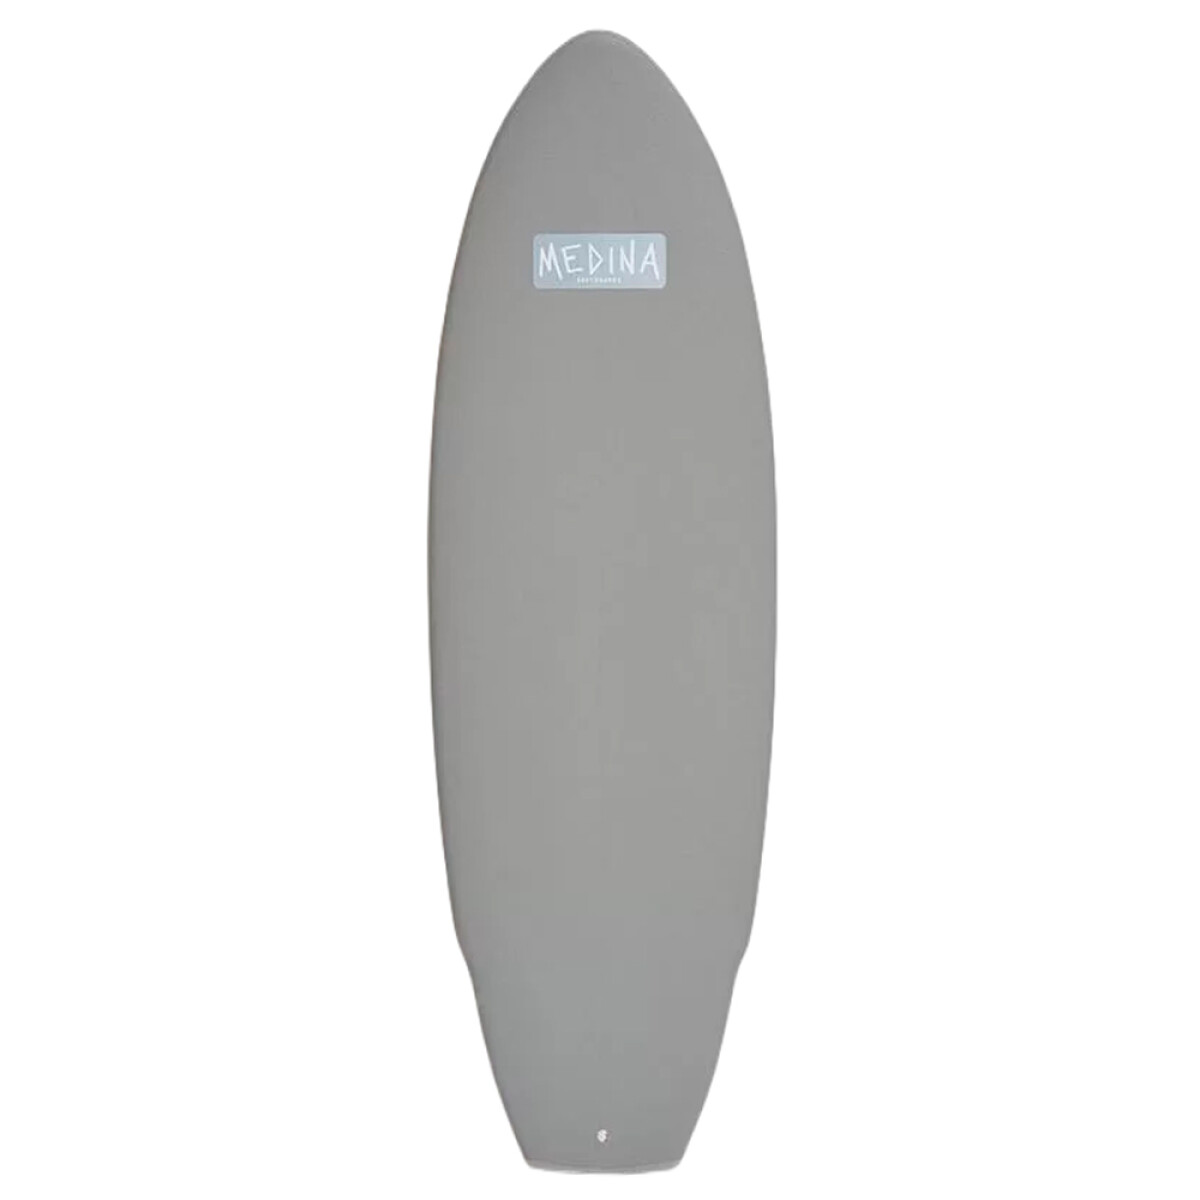 Tabla de surf Medina Softboards 5'8 Blend - Fcs2 